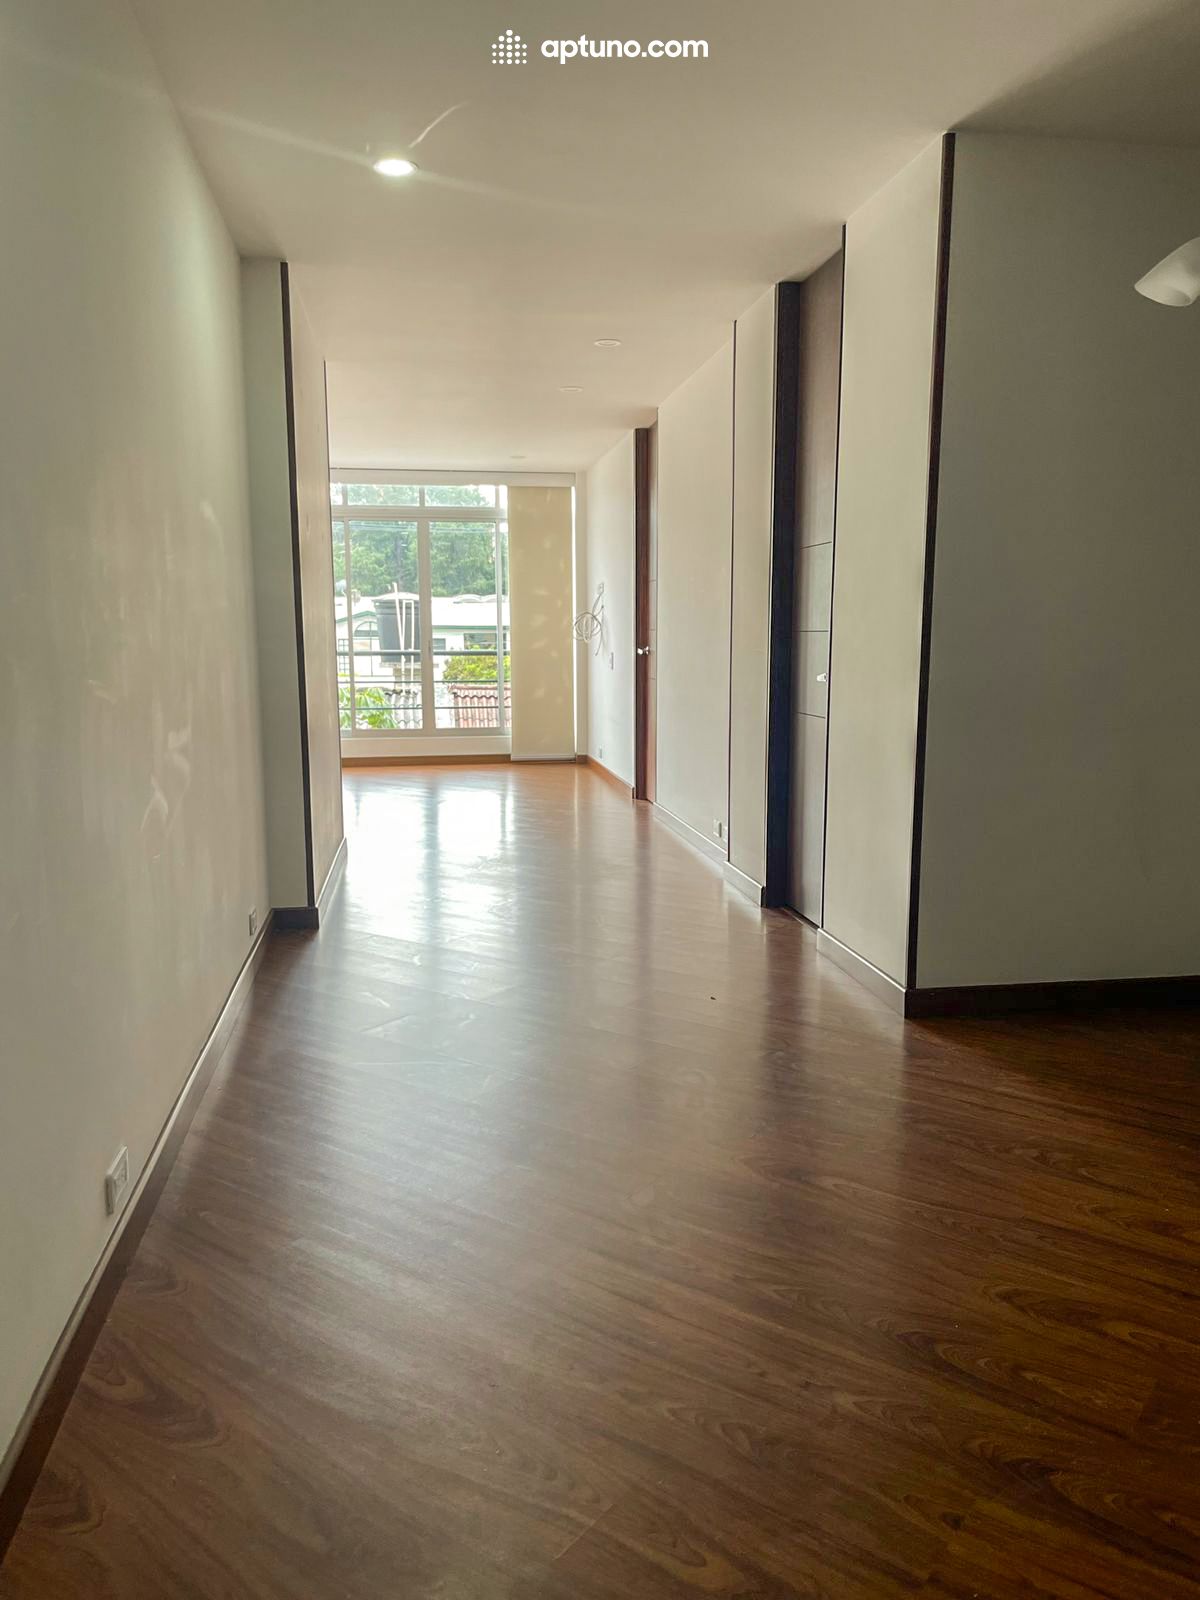 Apartamento en arriendo Lisboa 52 m² - $ 2.200.000